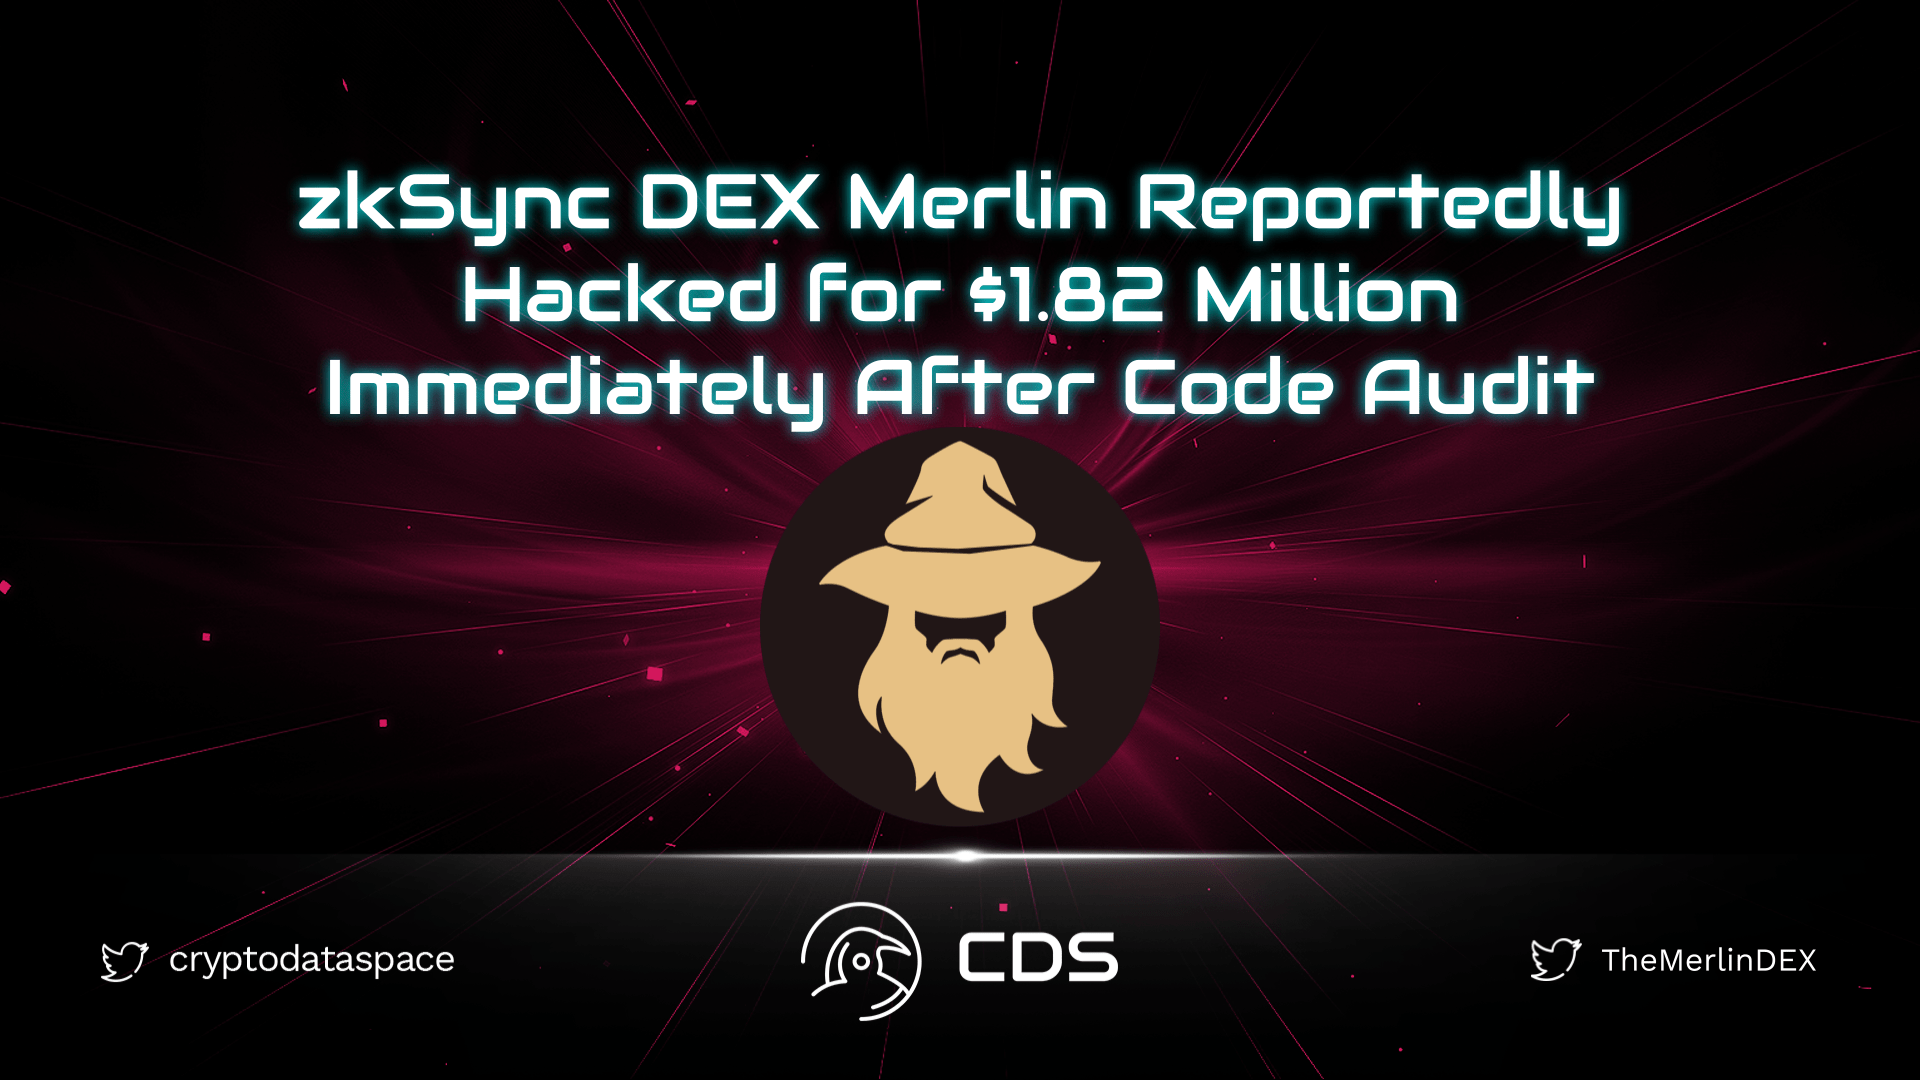 BREAKING: zkSync DEX Merlin Reportedly Hacked for $1.82 Million Immediately After Code Audit